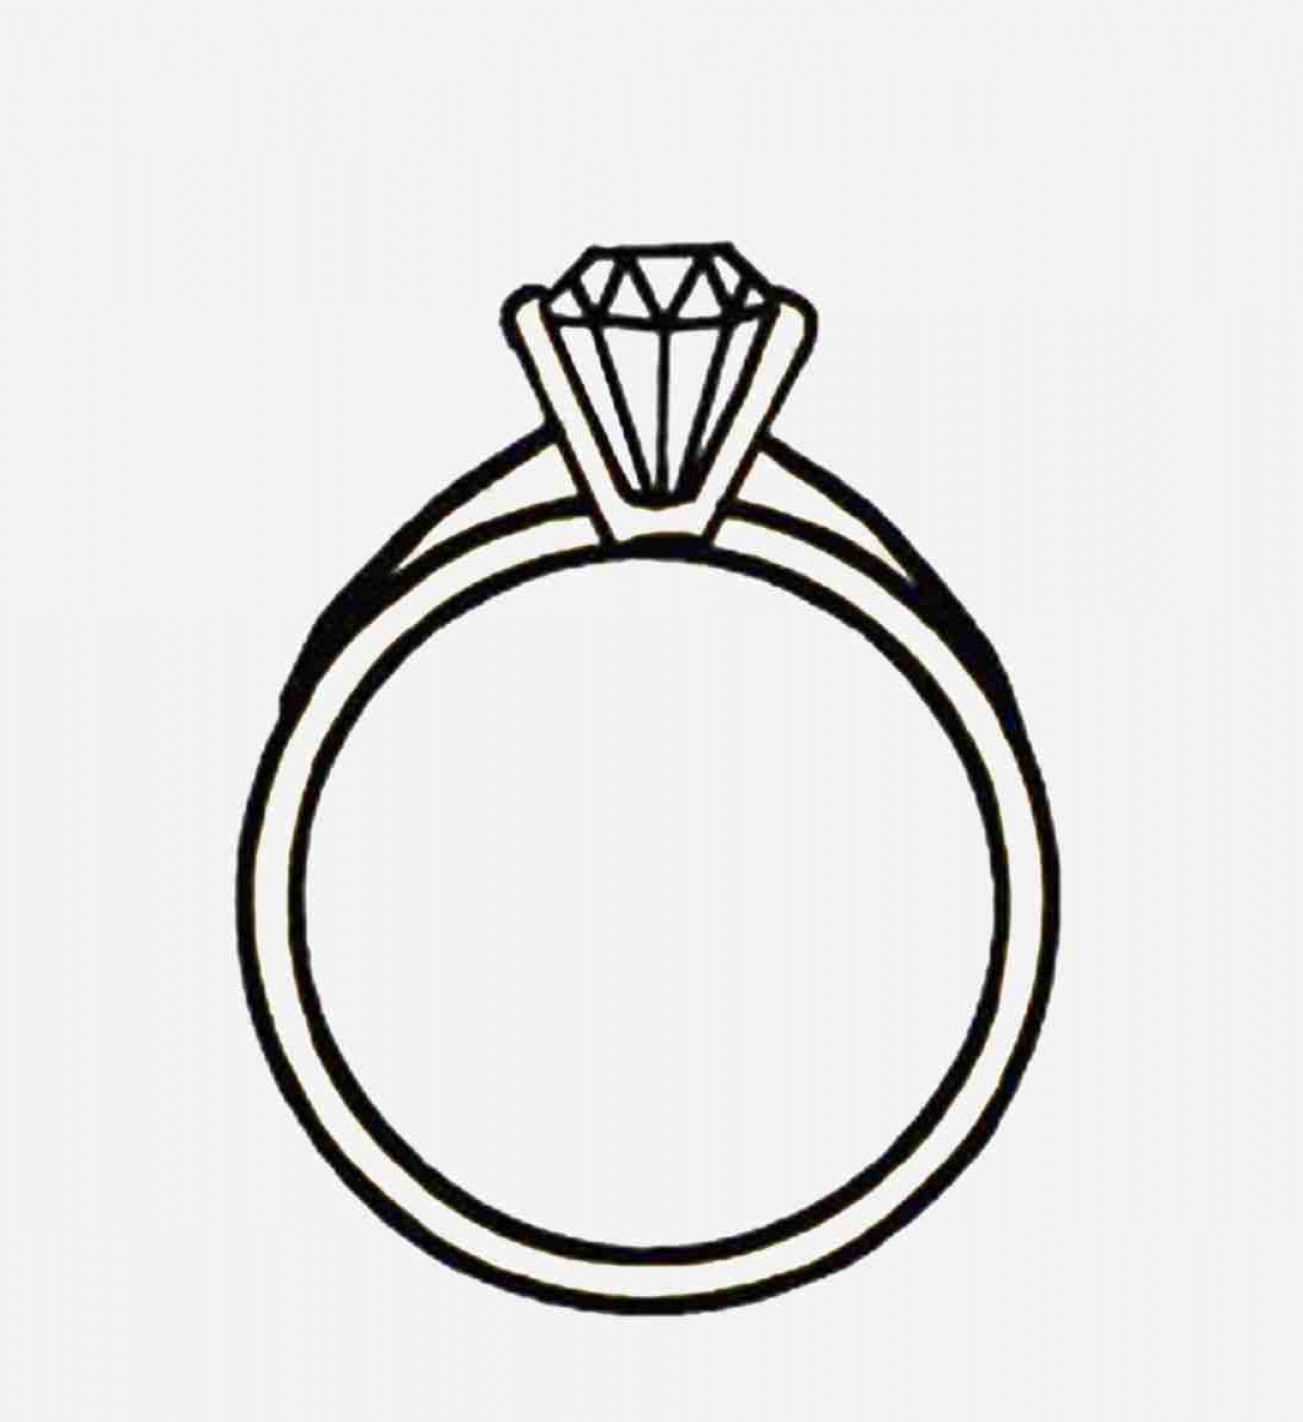 helder in de rij gaan staan dak cartoon wedding ring Cartoon black and white wedding rings ecuatwitt jpg -  Clipartix